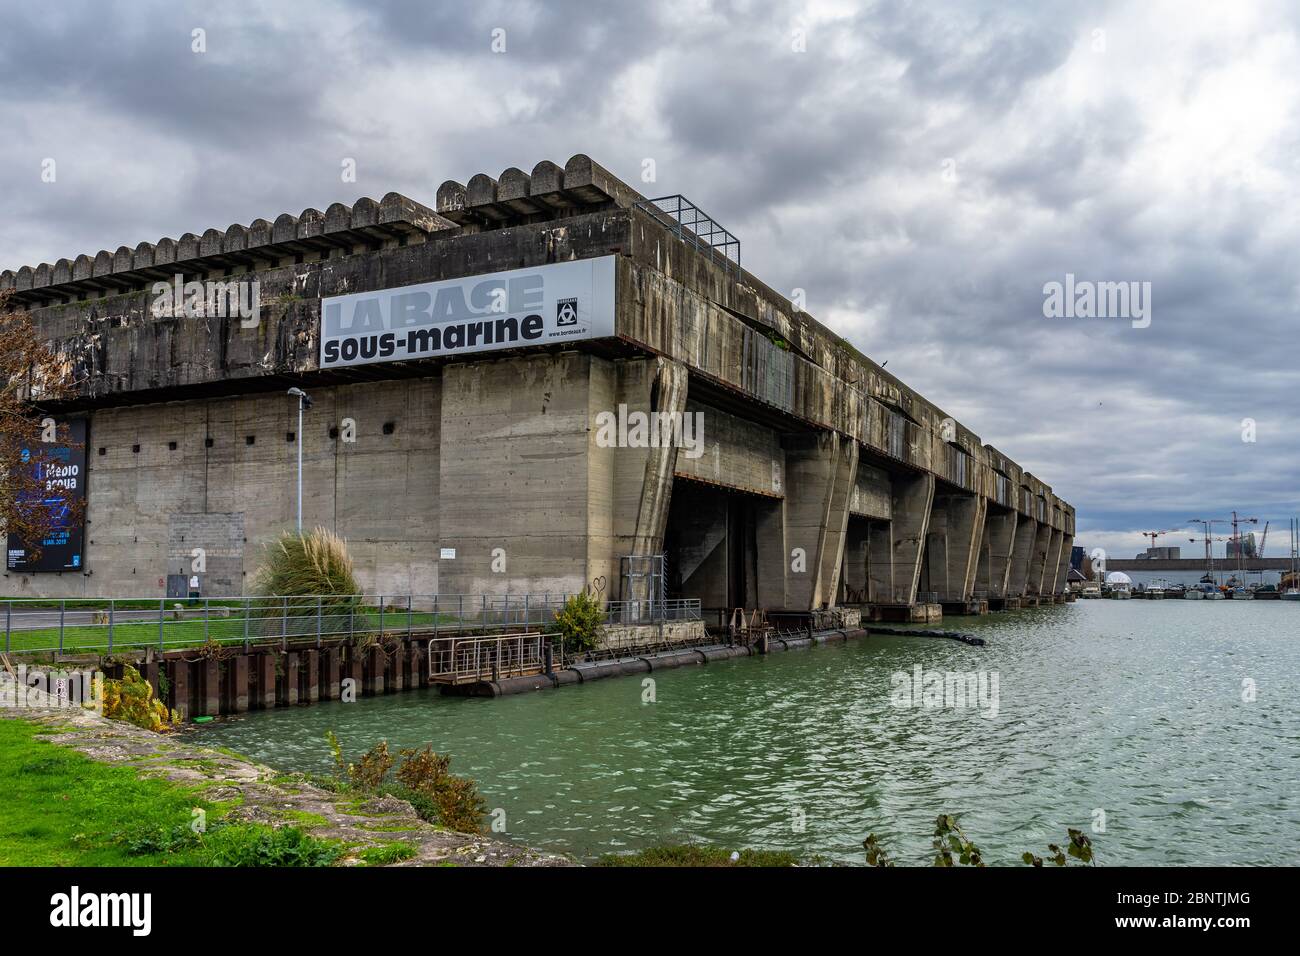 Base sous marine in Bordeaux, France Stock Photo - Alamy